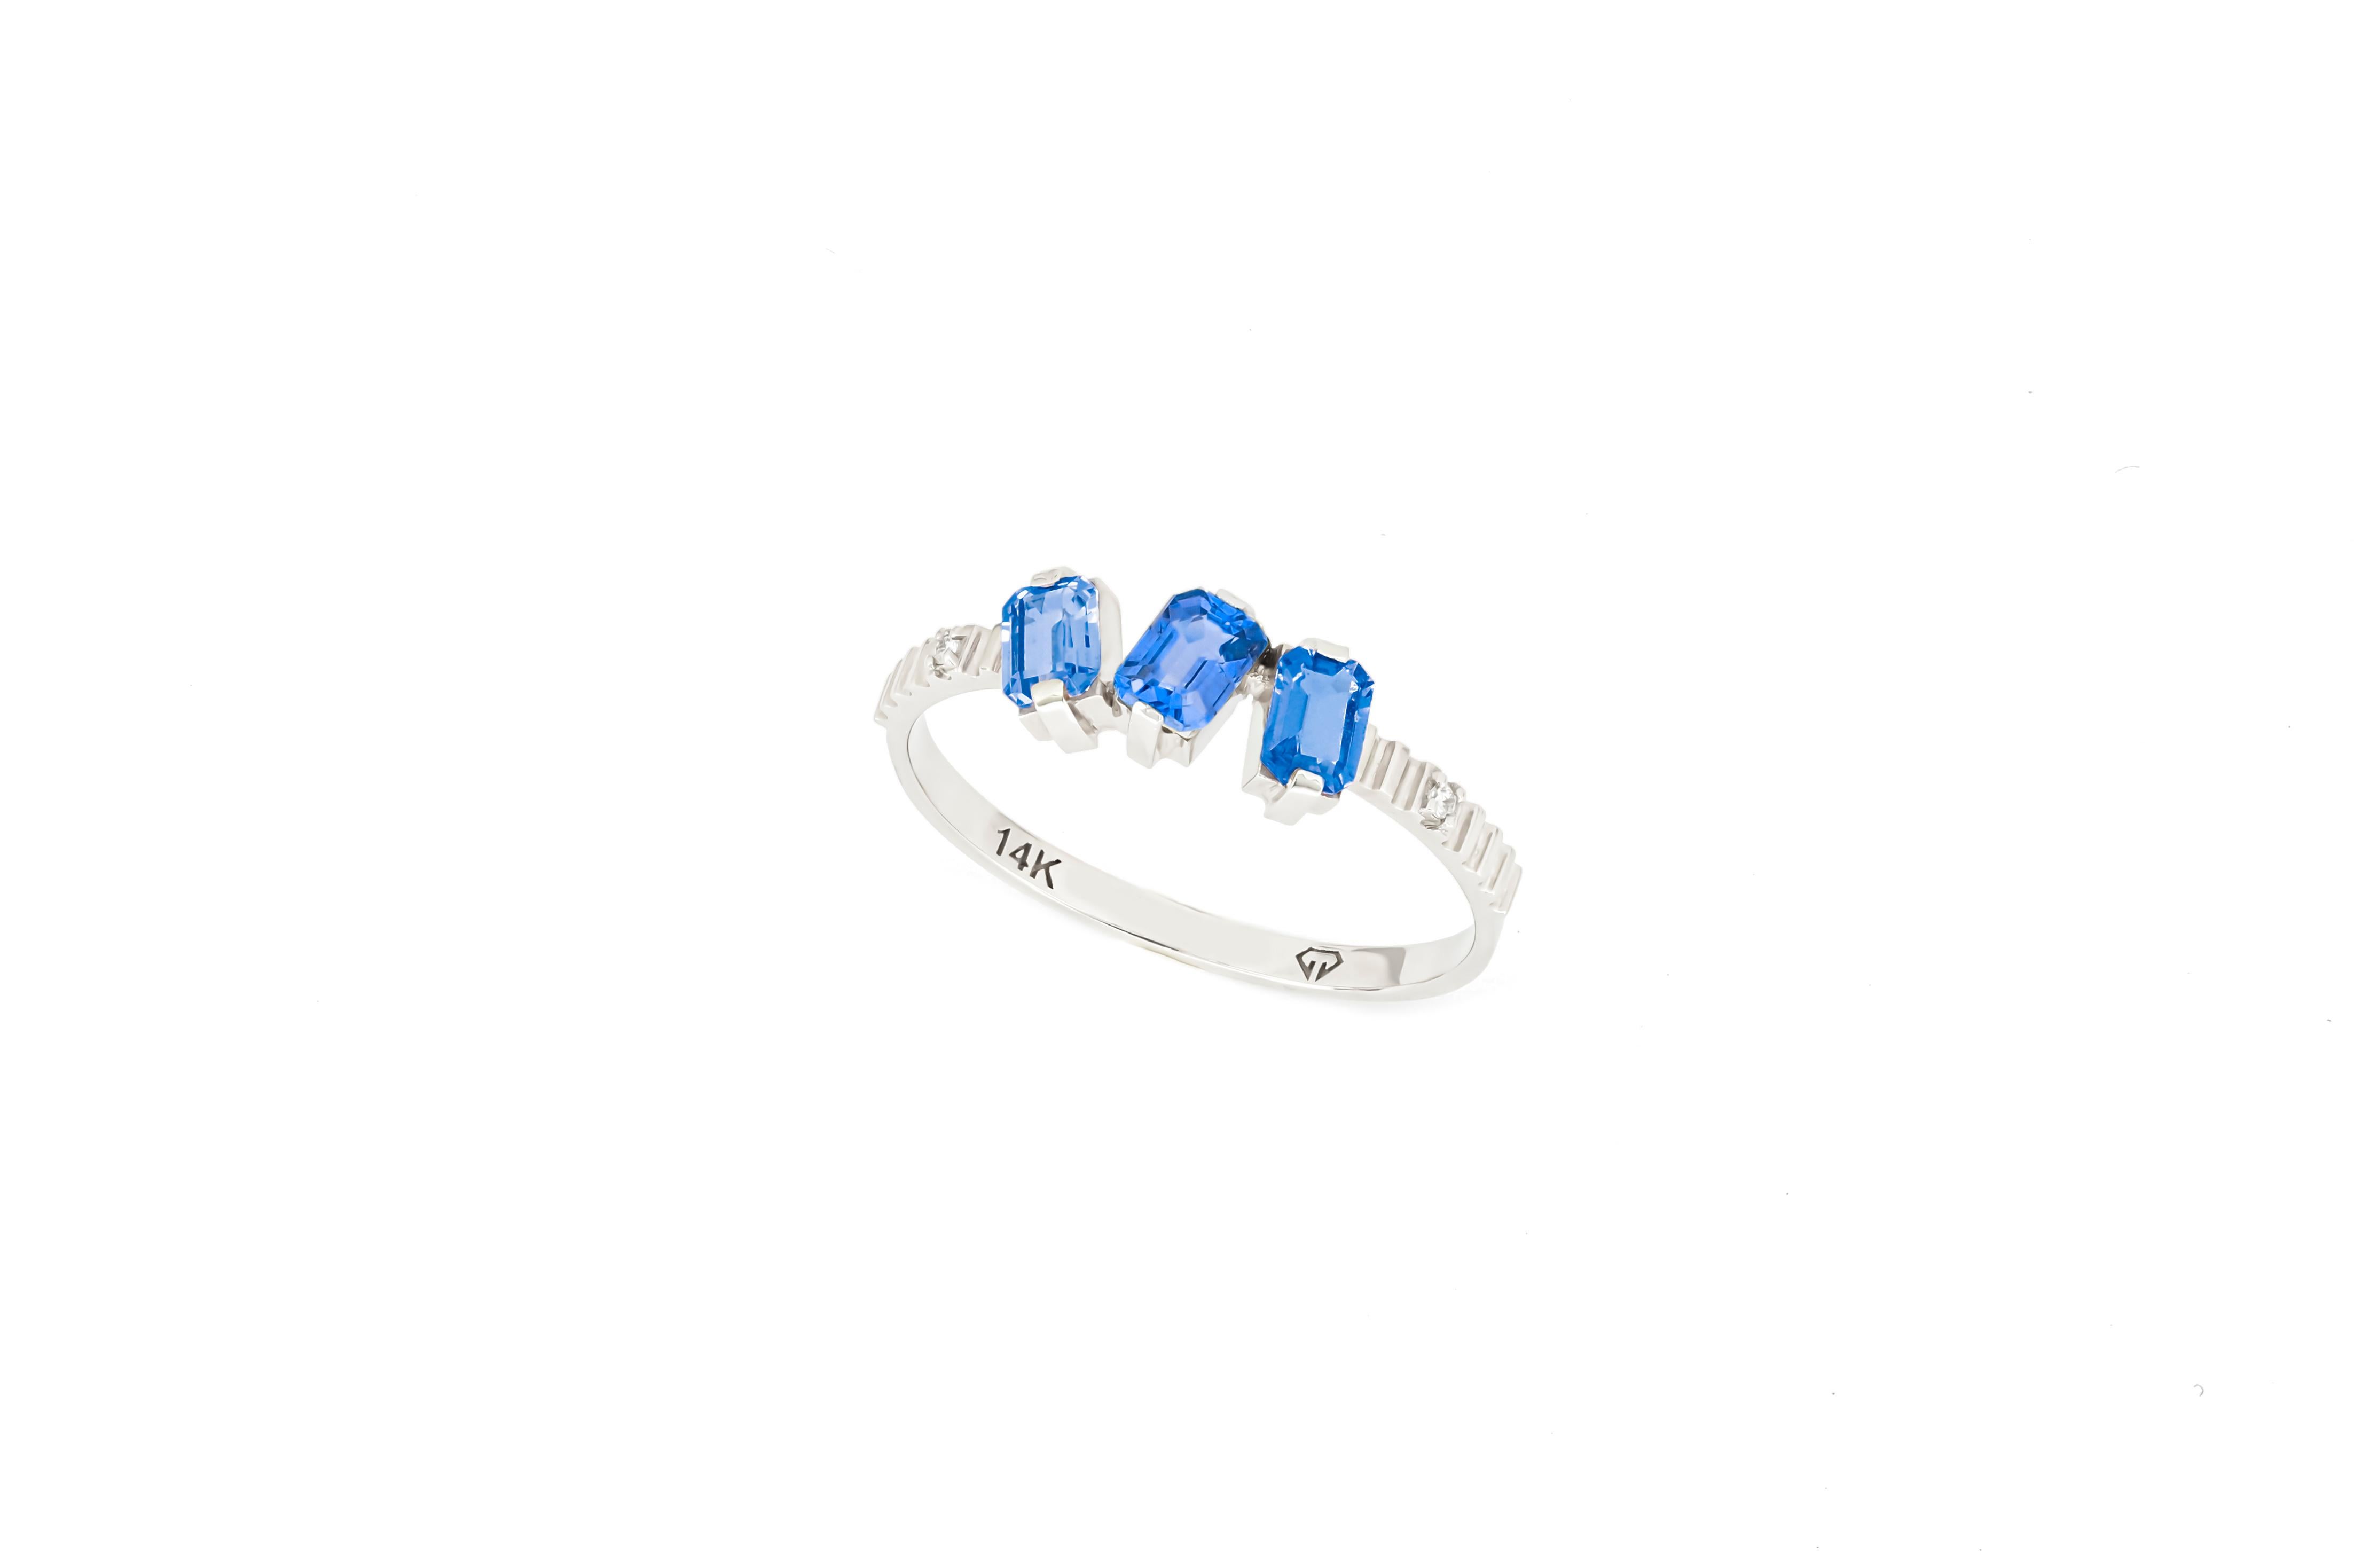 For Sale:  Monochrome blue gemstone 14k ring.  7